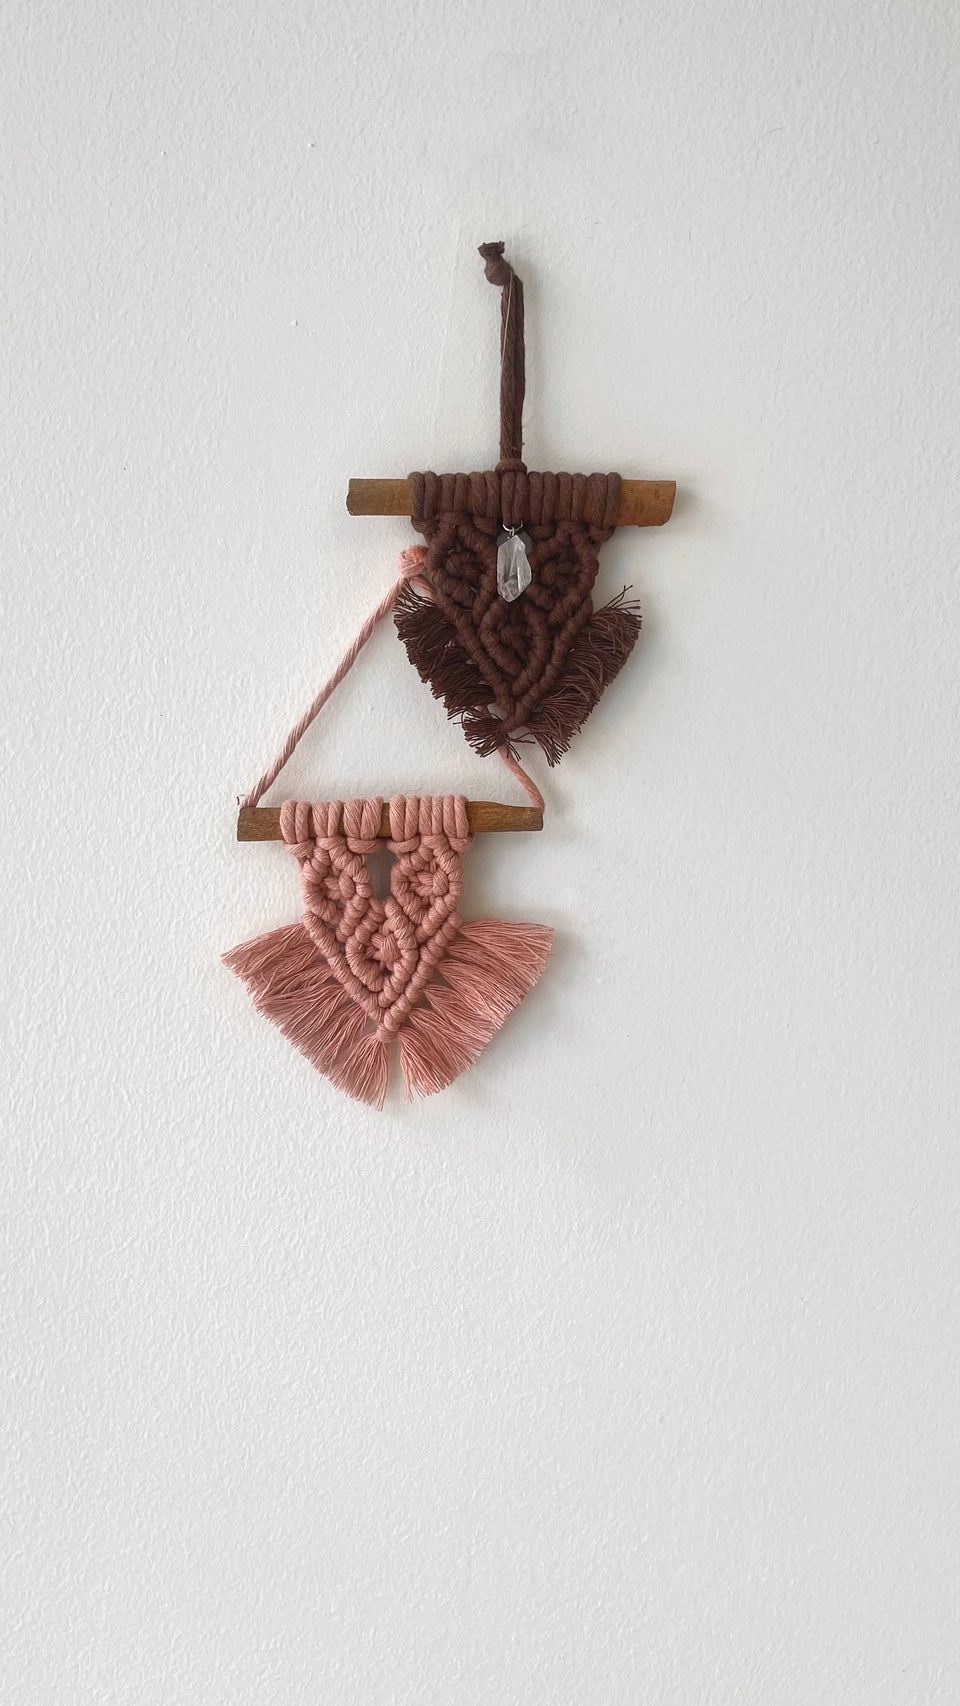 Decorative Cinnamon Stick for crafts